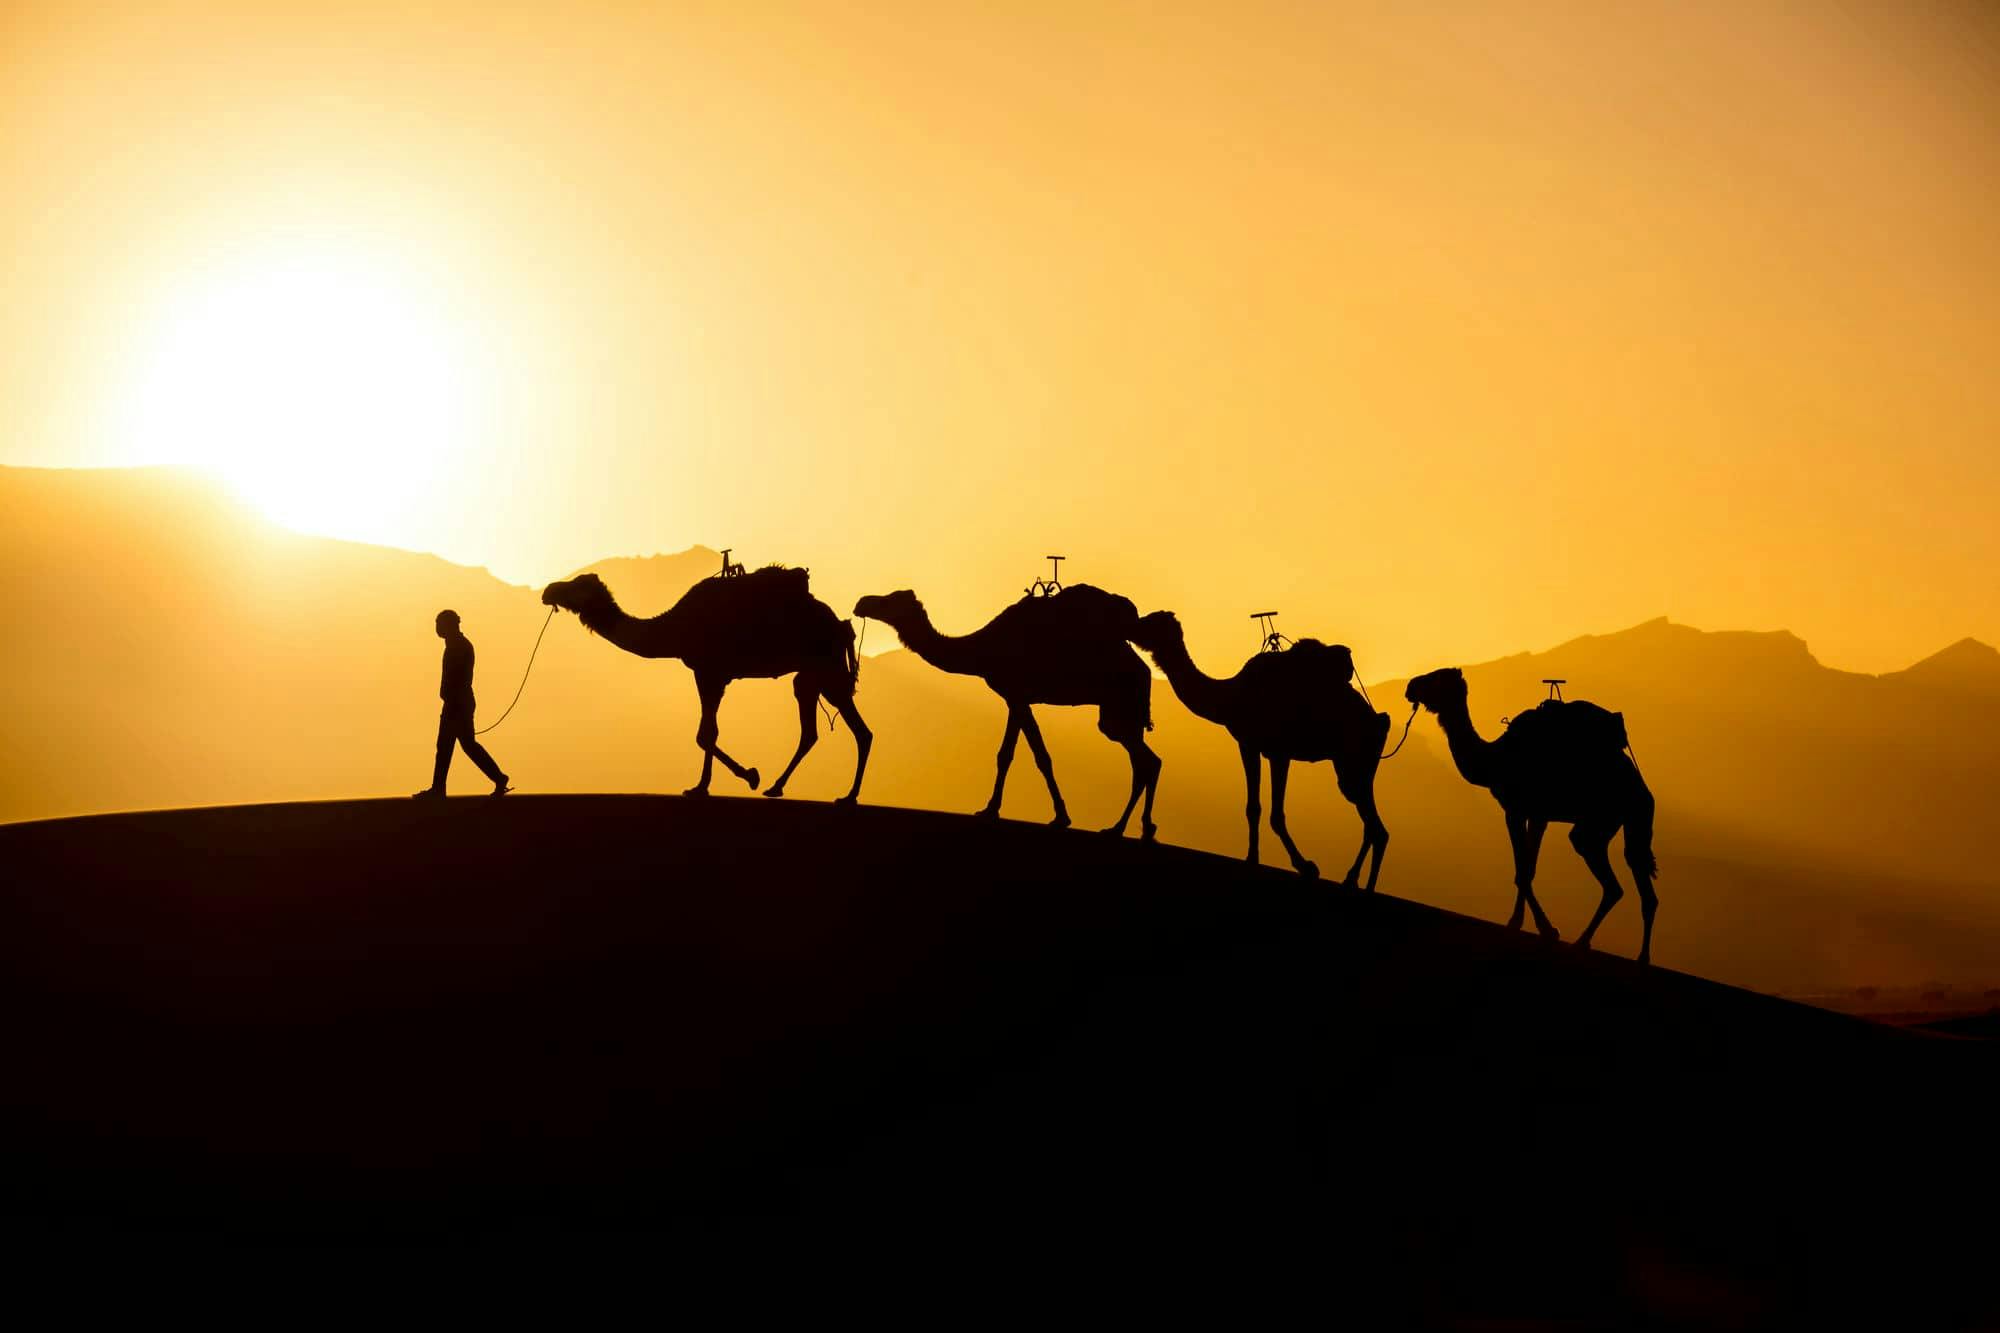 Experiencia de caminata en camello y barbacoa